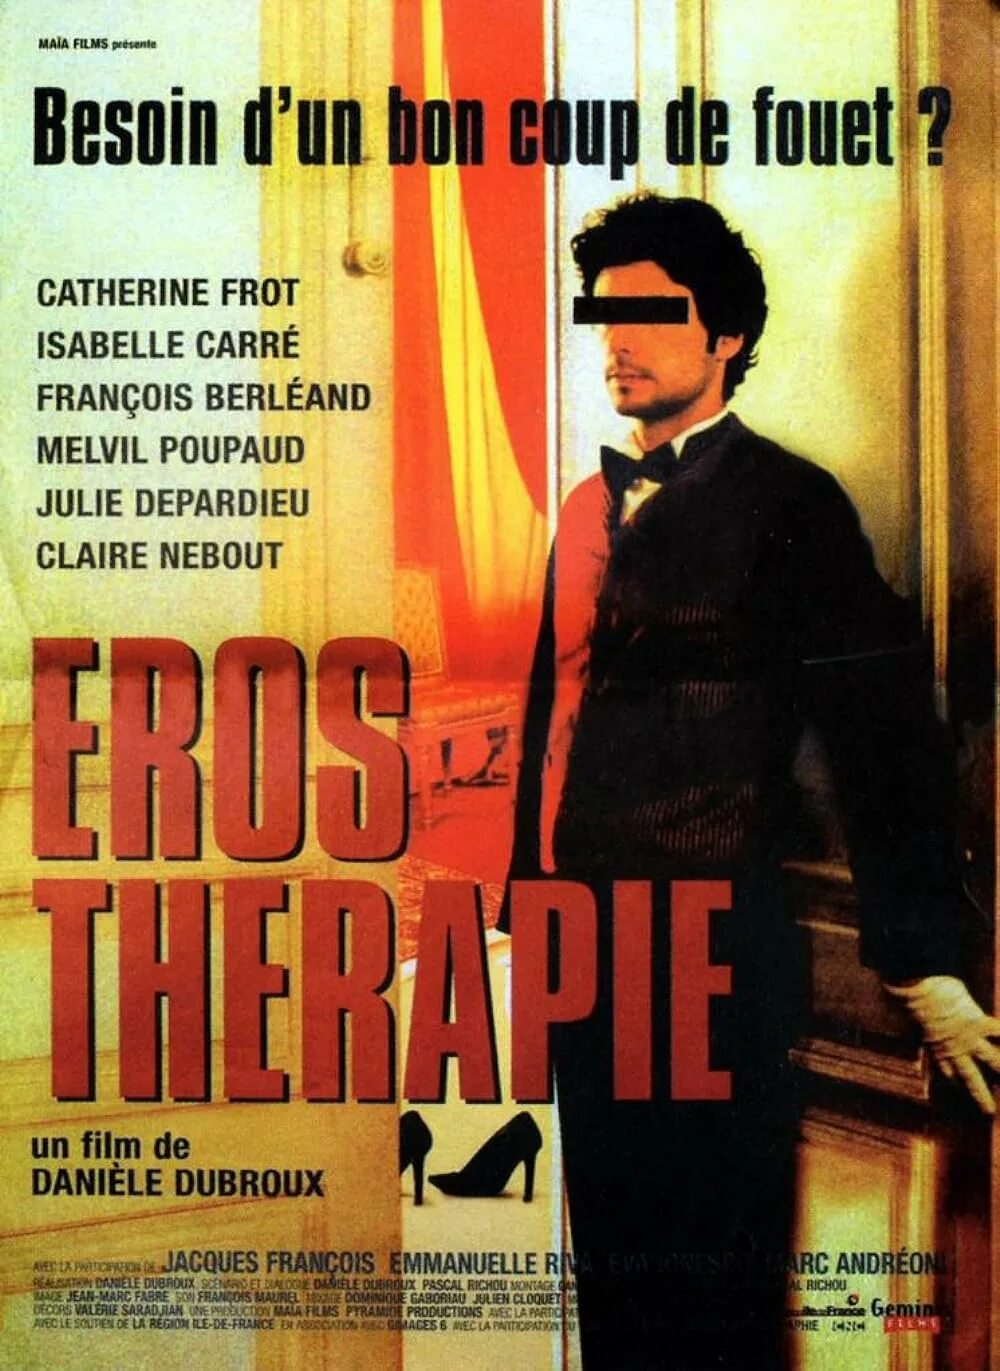 Eros Therapy 2004. Eros 2004. Claire Nebout Eros Therapy. Eros movie